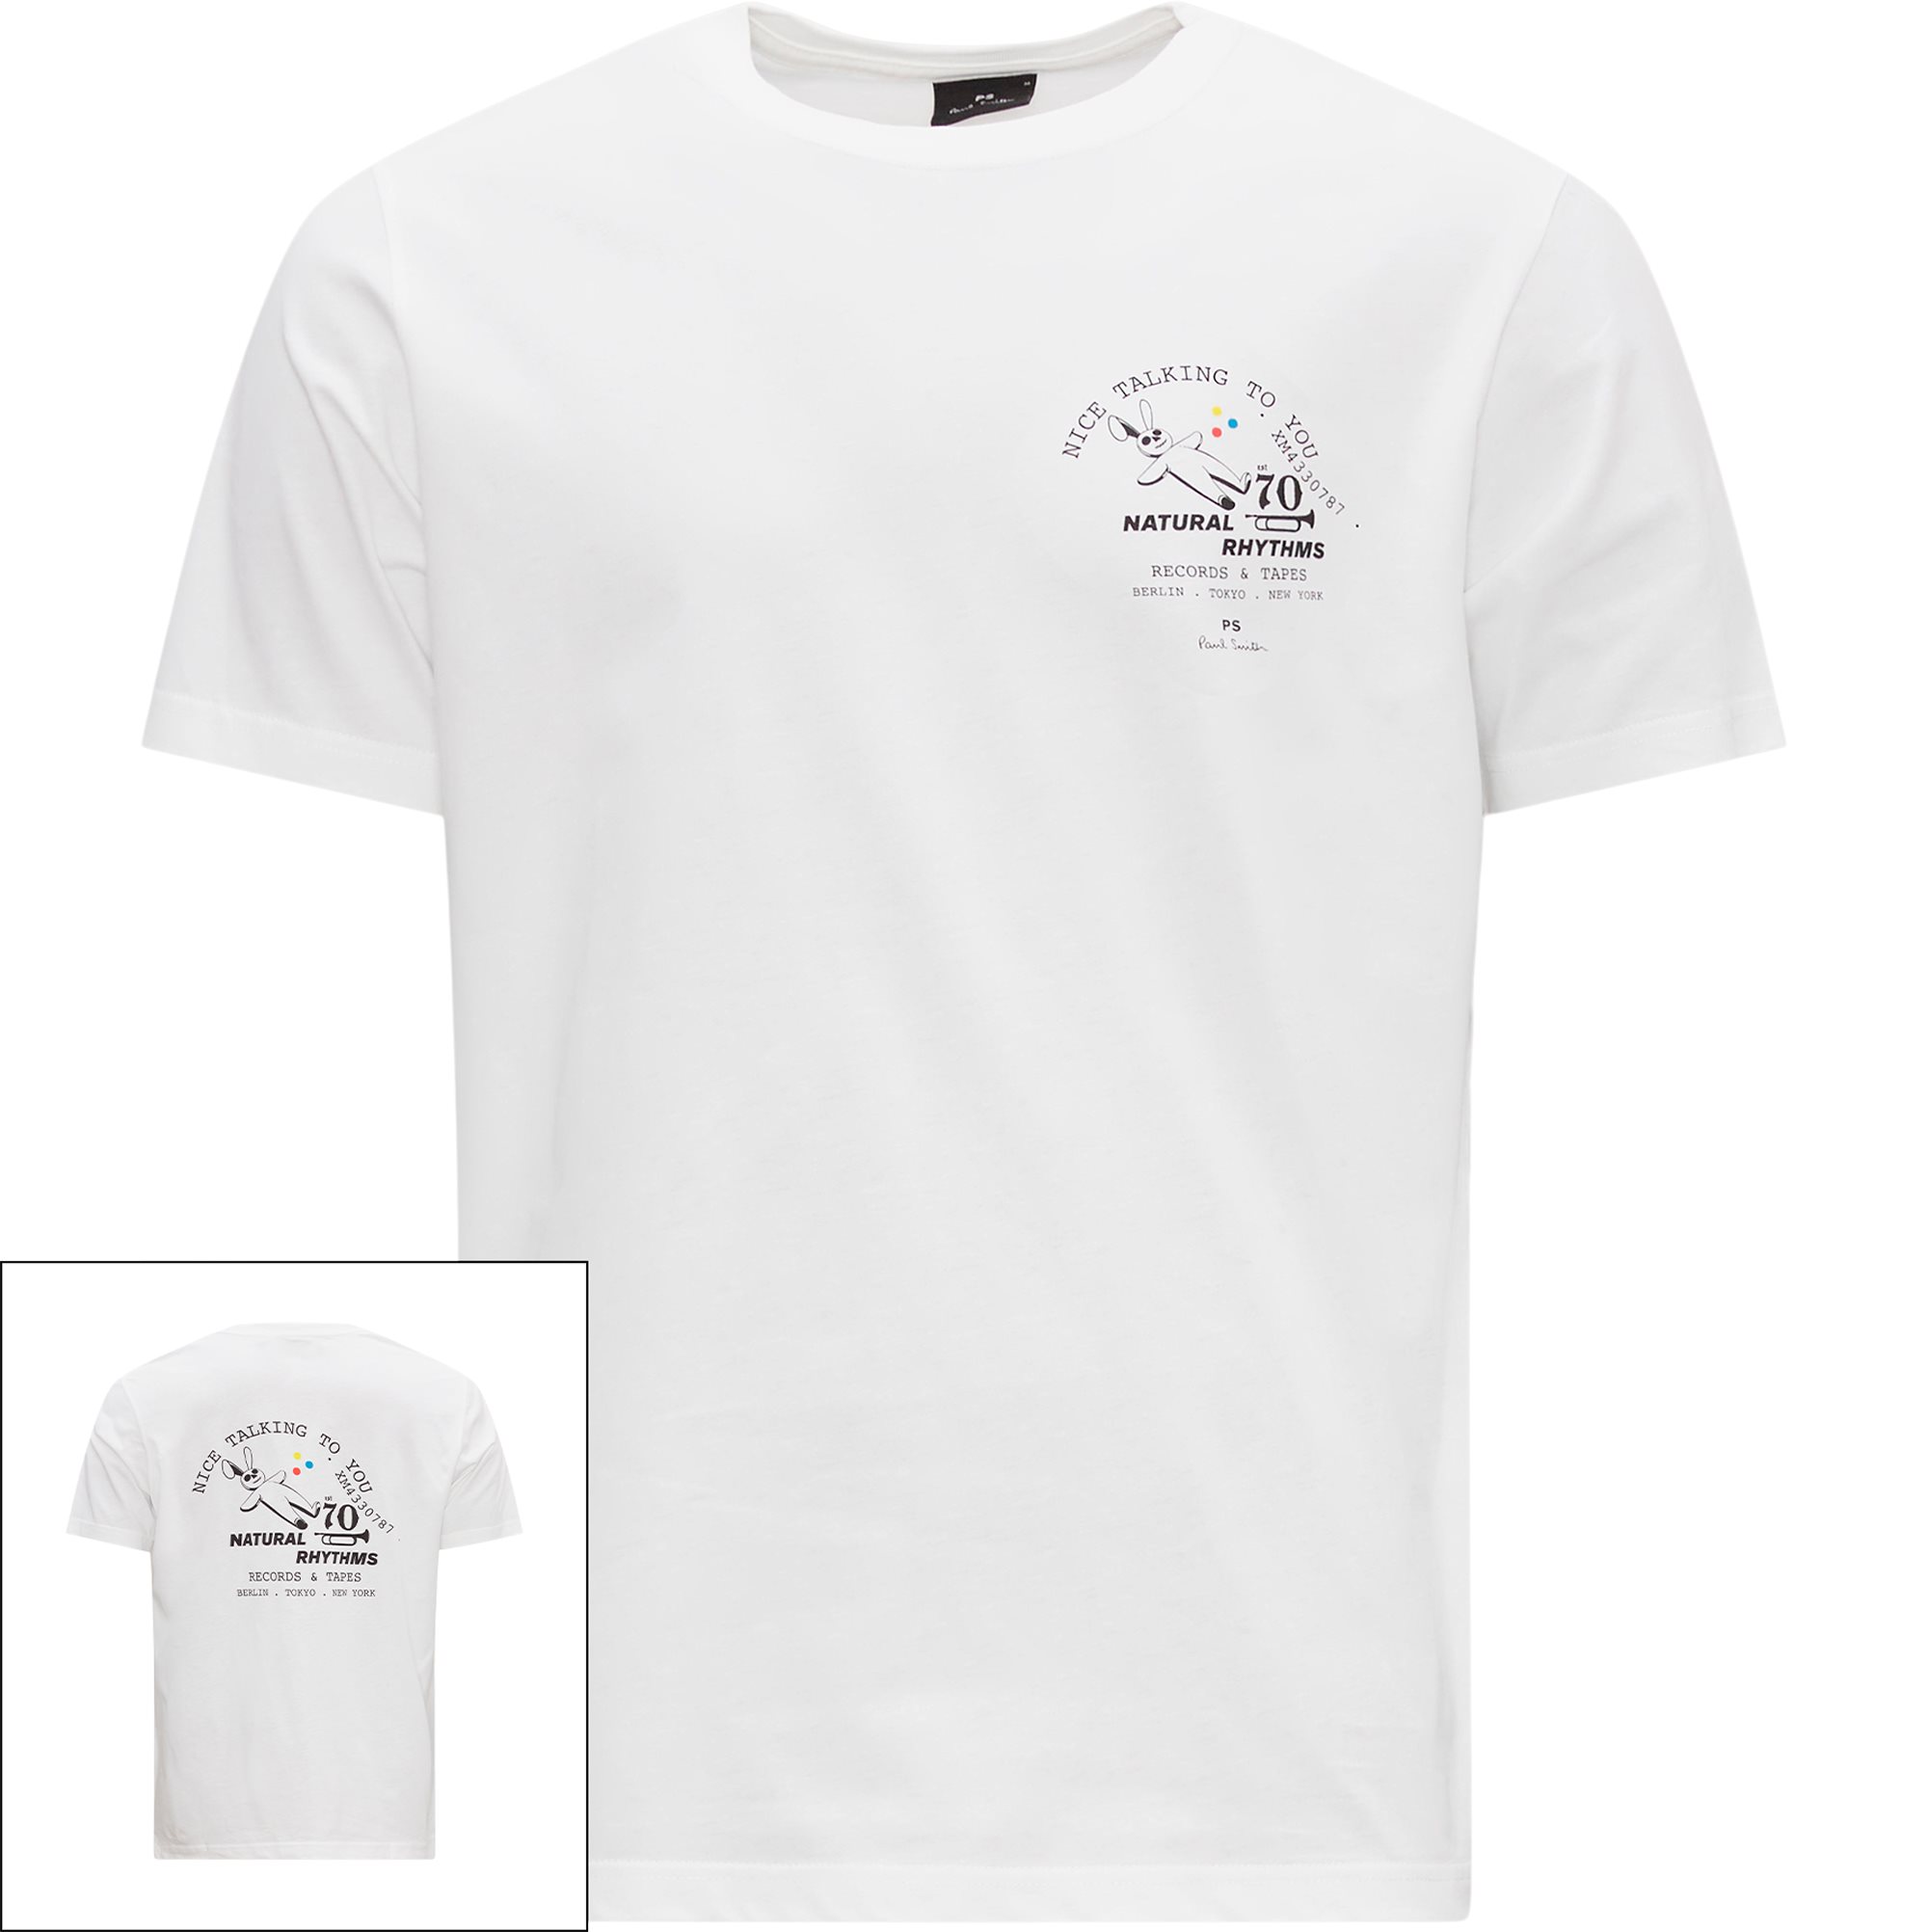 PS Paul Smith T-shirts 011R LP4054 White